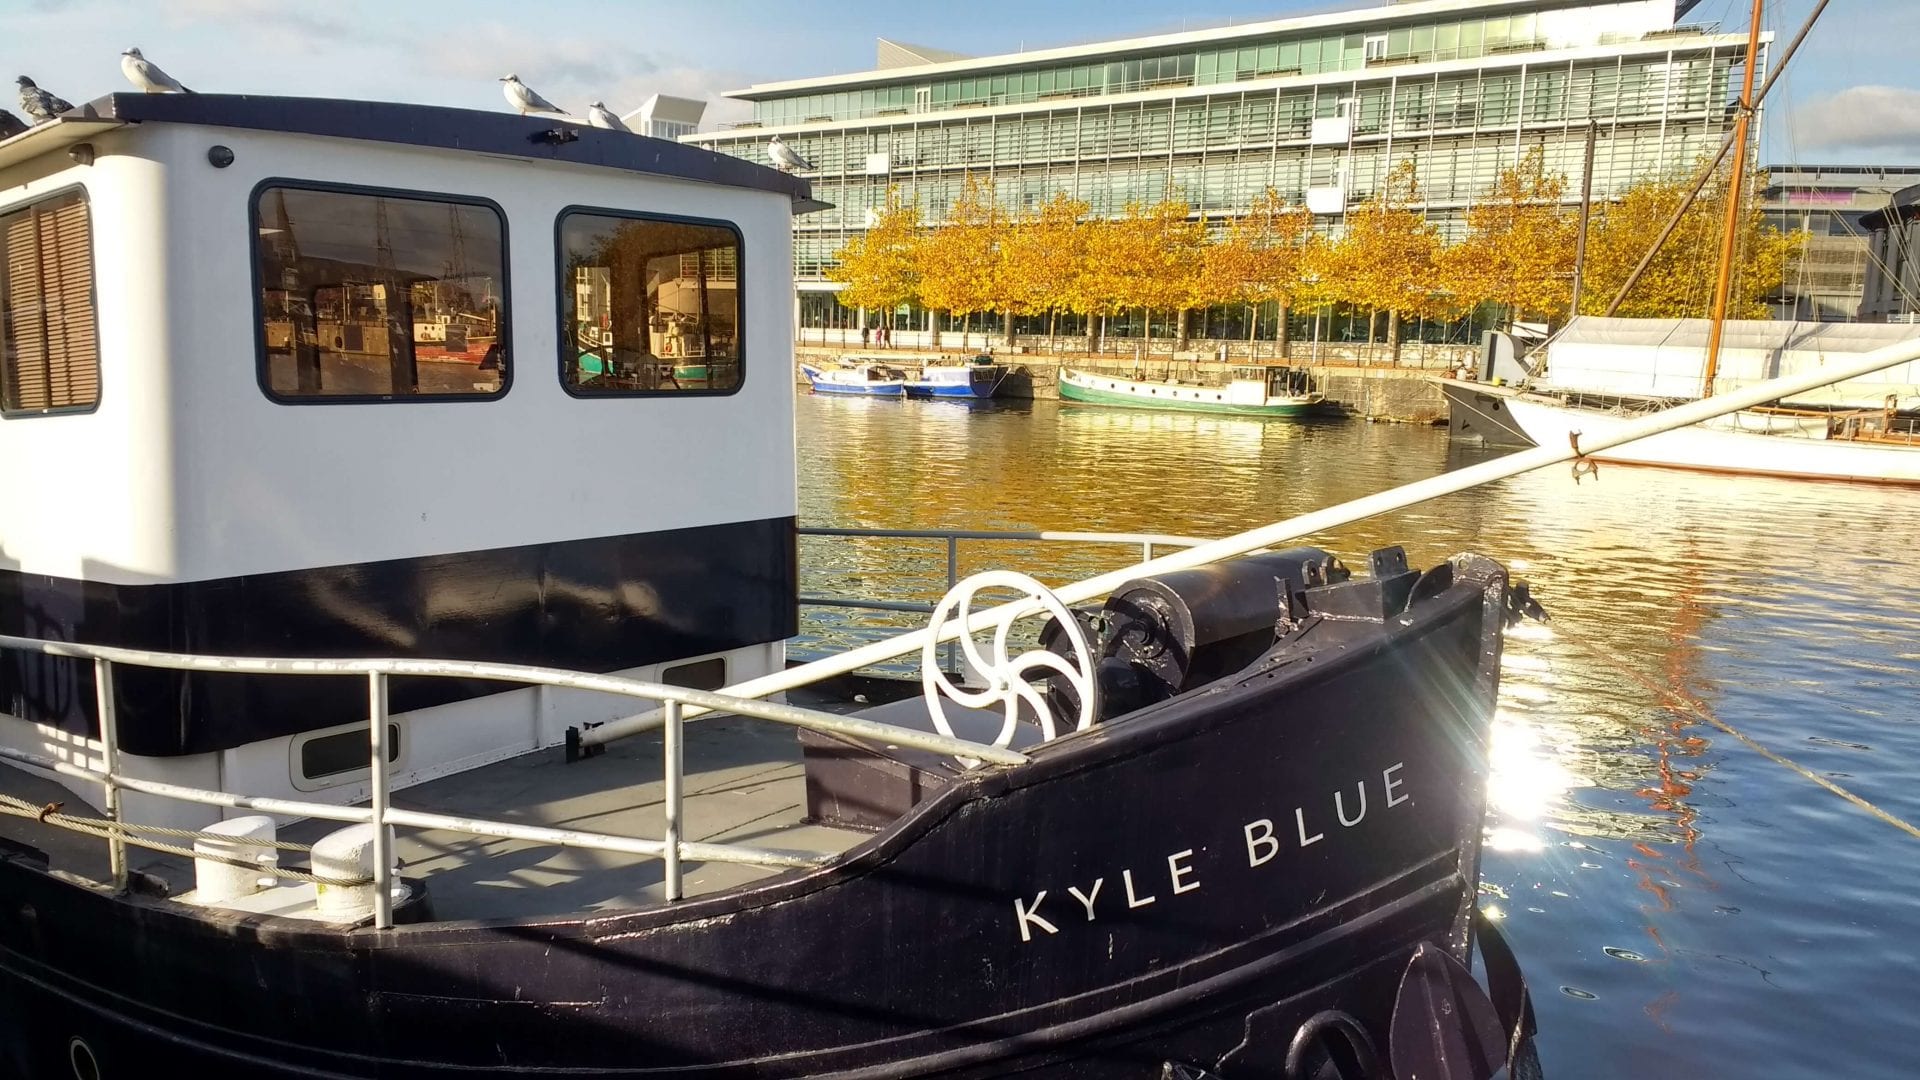 Kyke Blue - Bristol - independent hostel